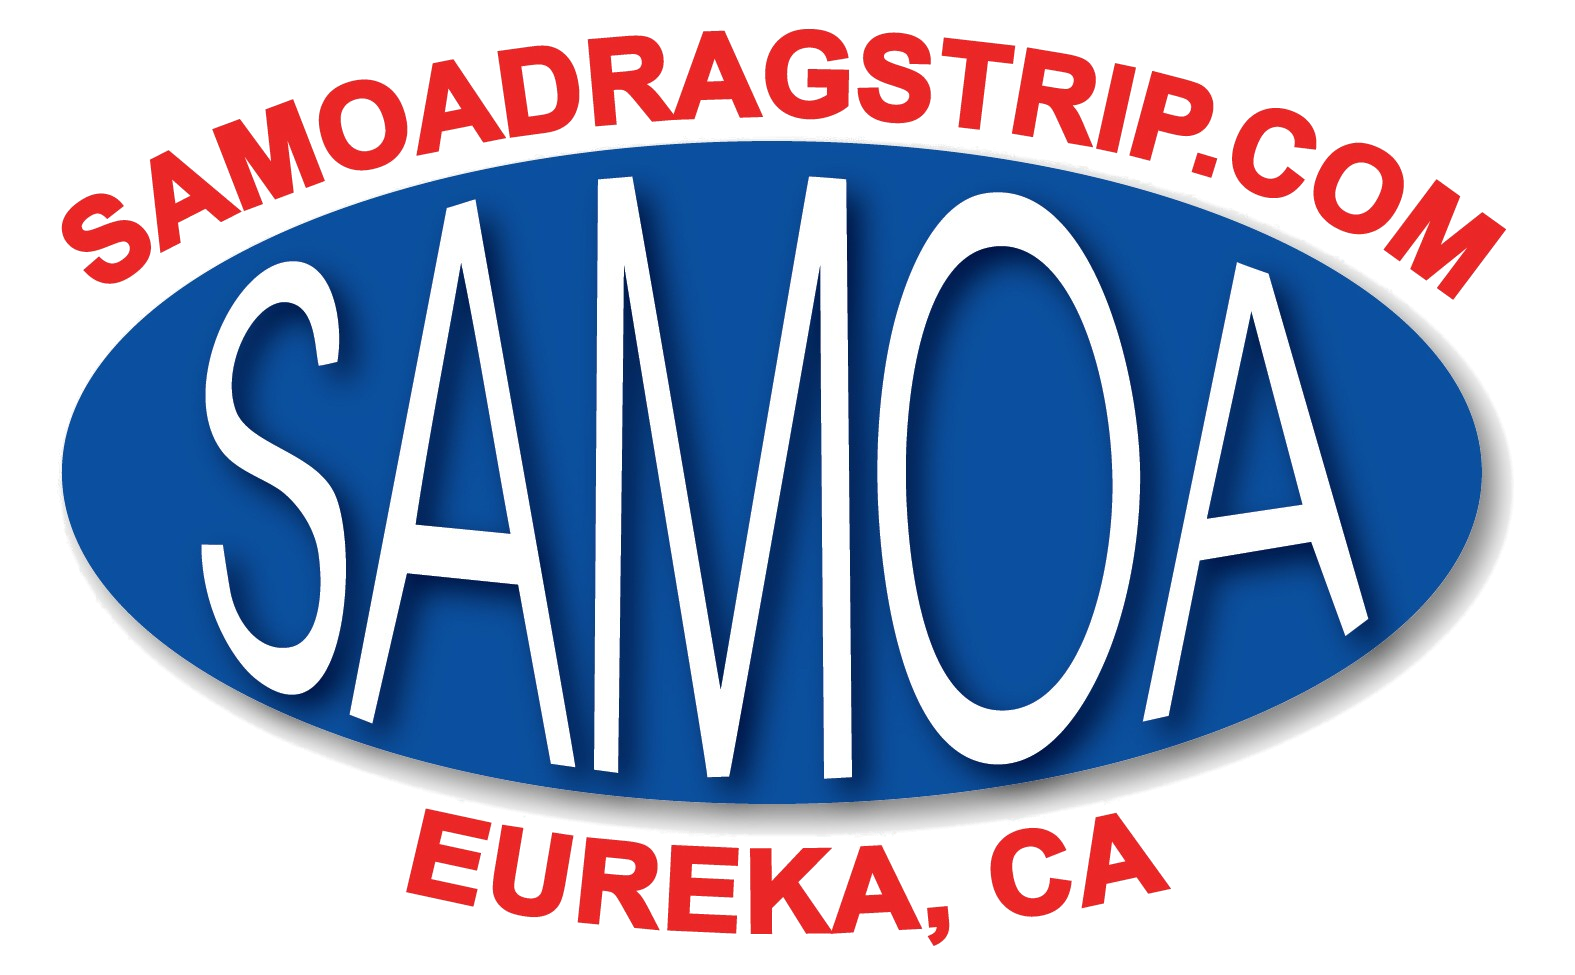 Somoa Drag Strip's logo